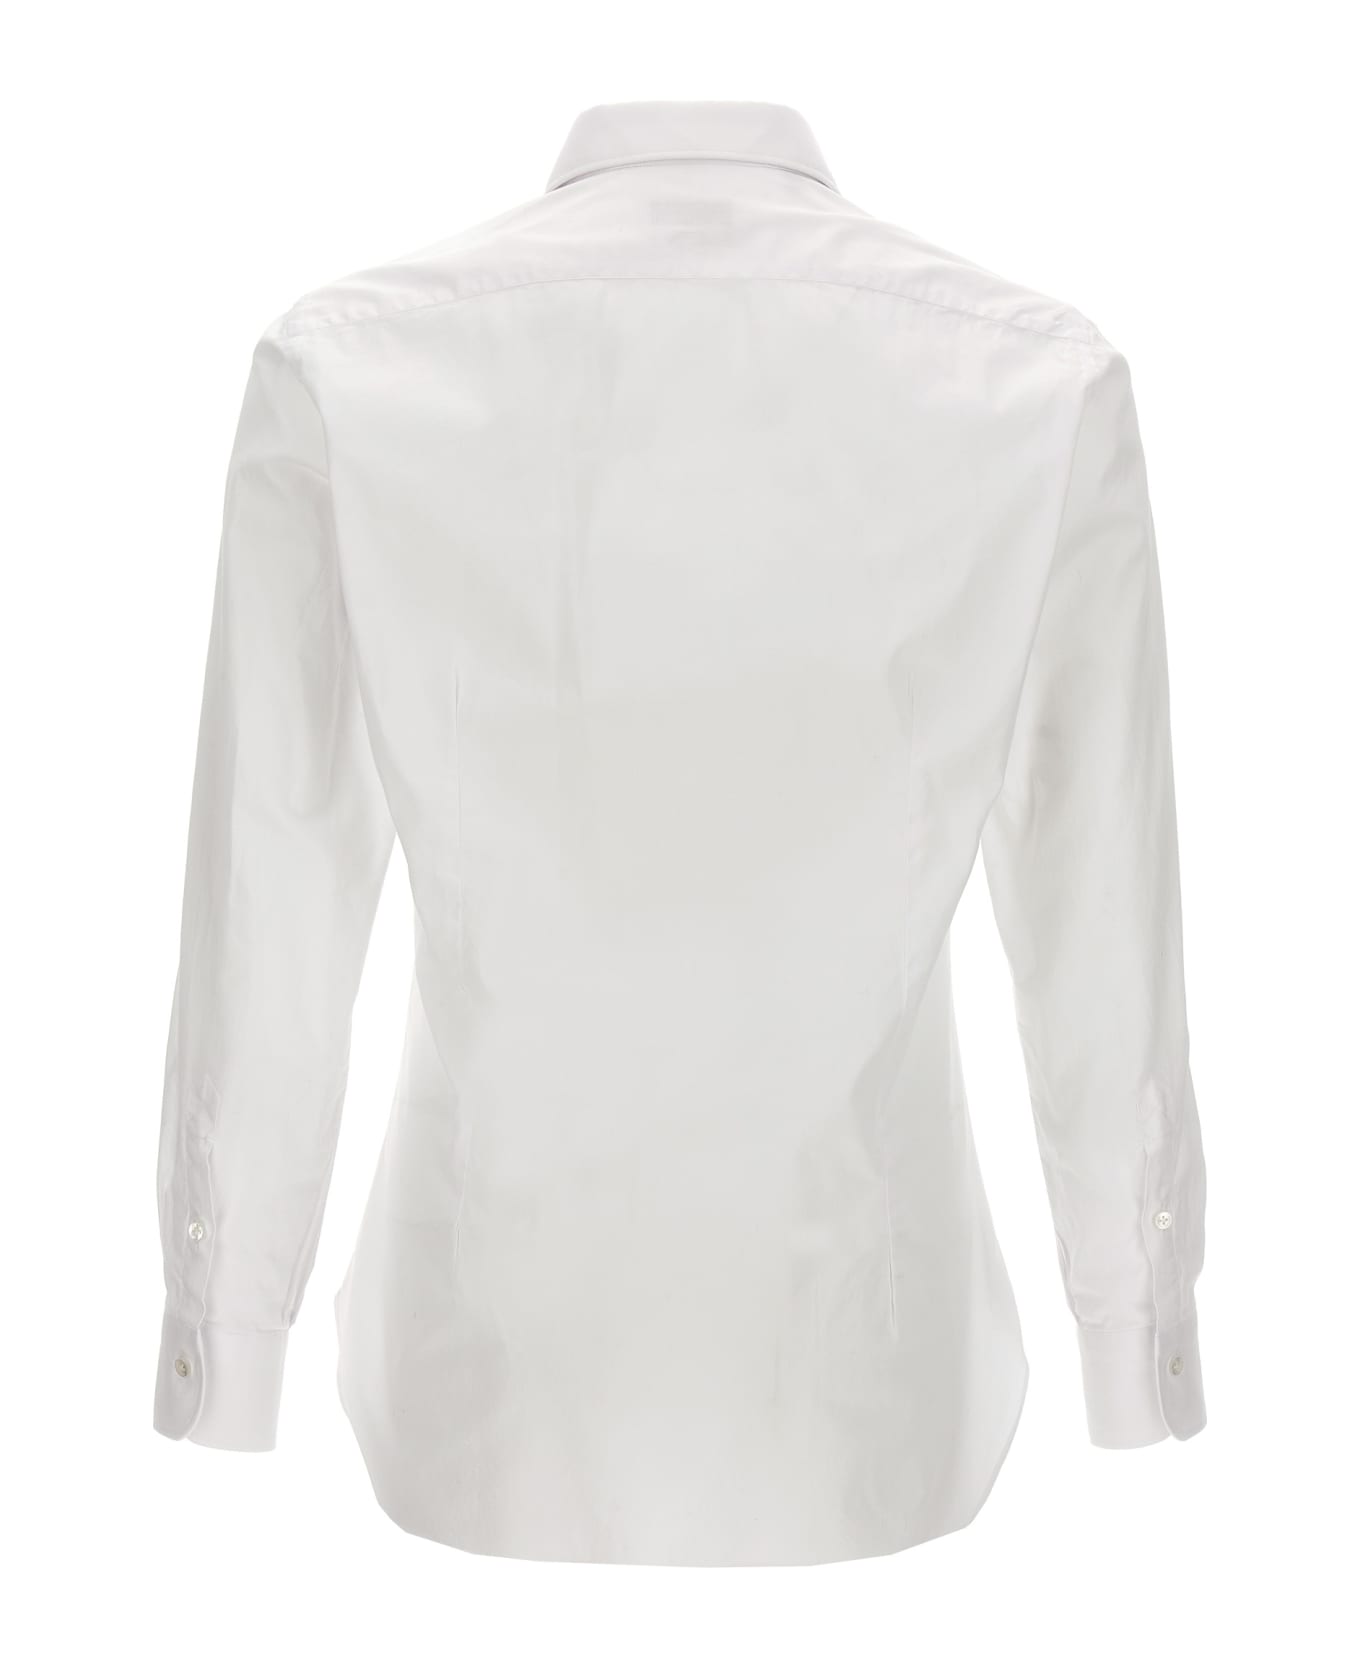 Barba Napoli 'culto' Shirt - White